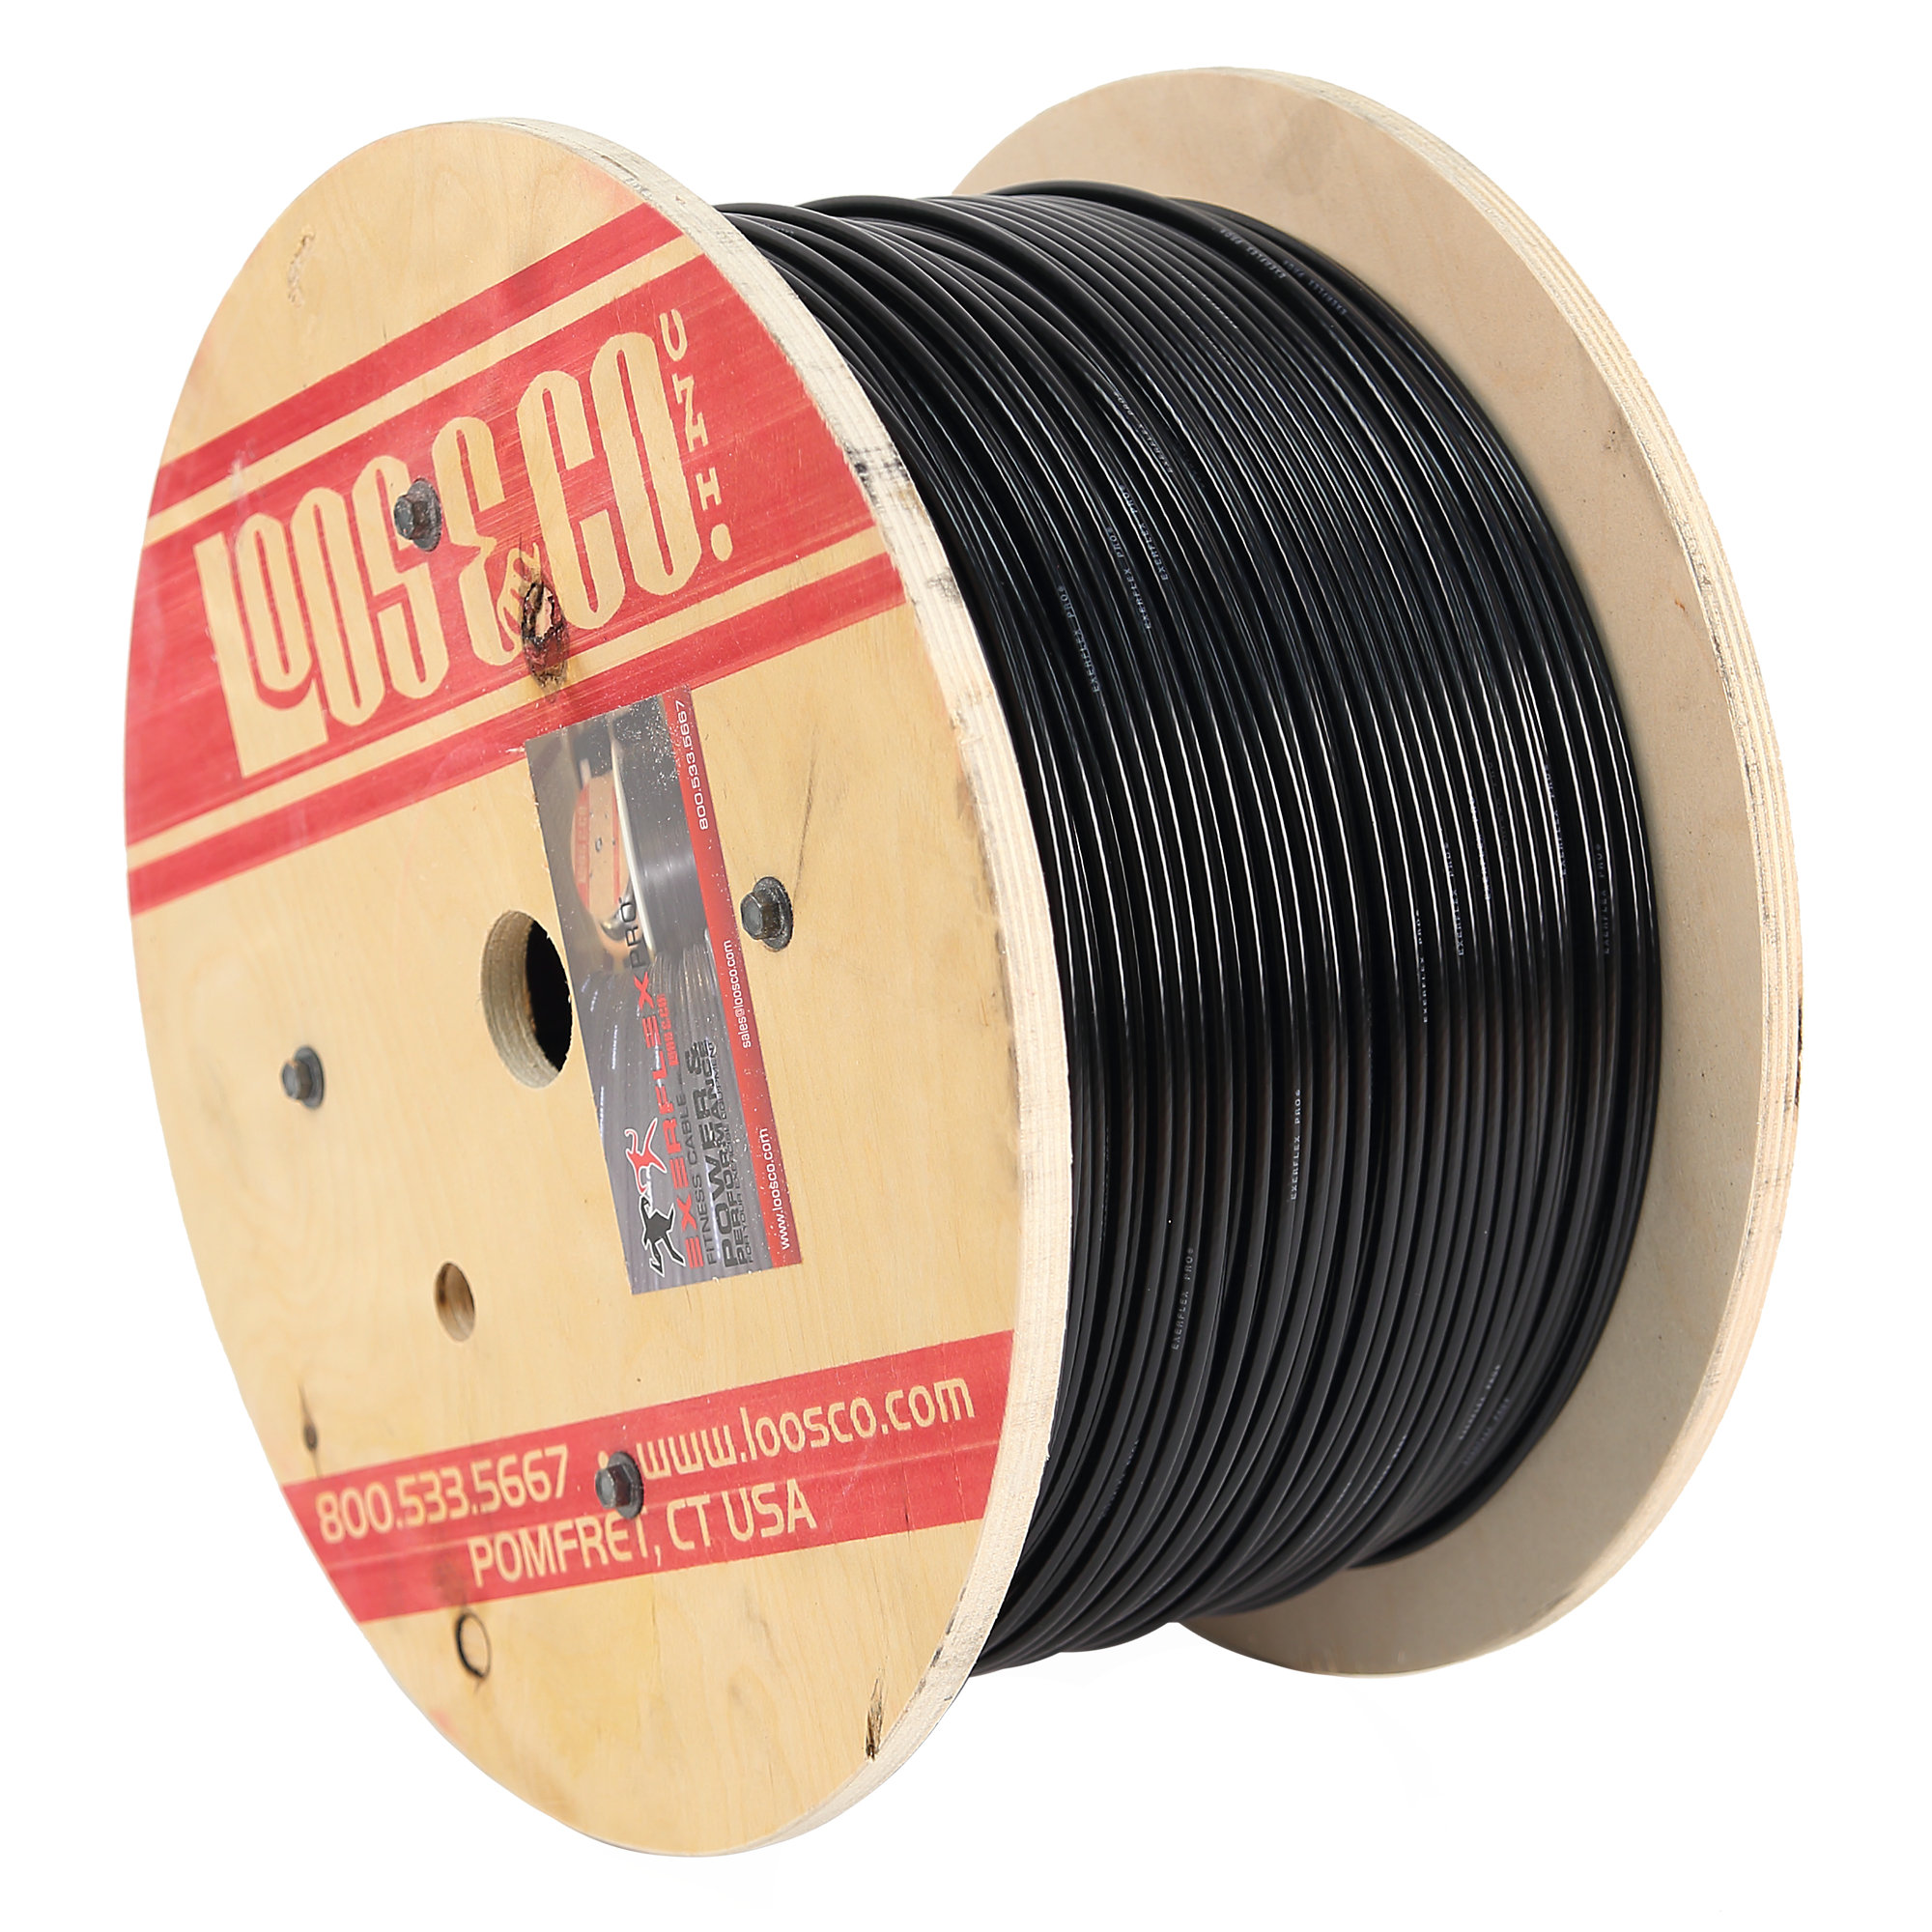  Exerflex Pro Cable 3/16", Black Nylon Coating | 1,000 Foot Reel 